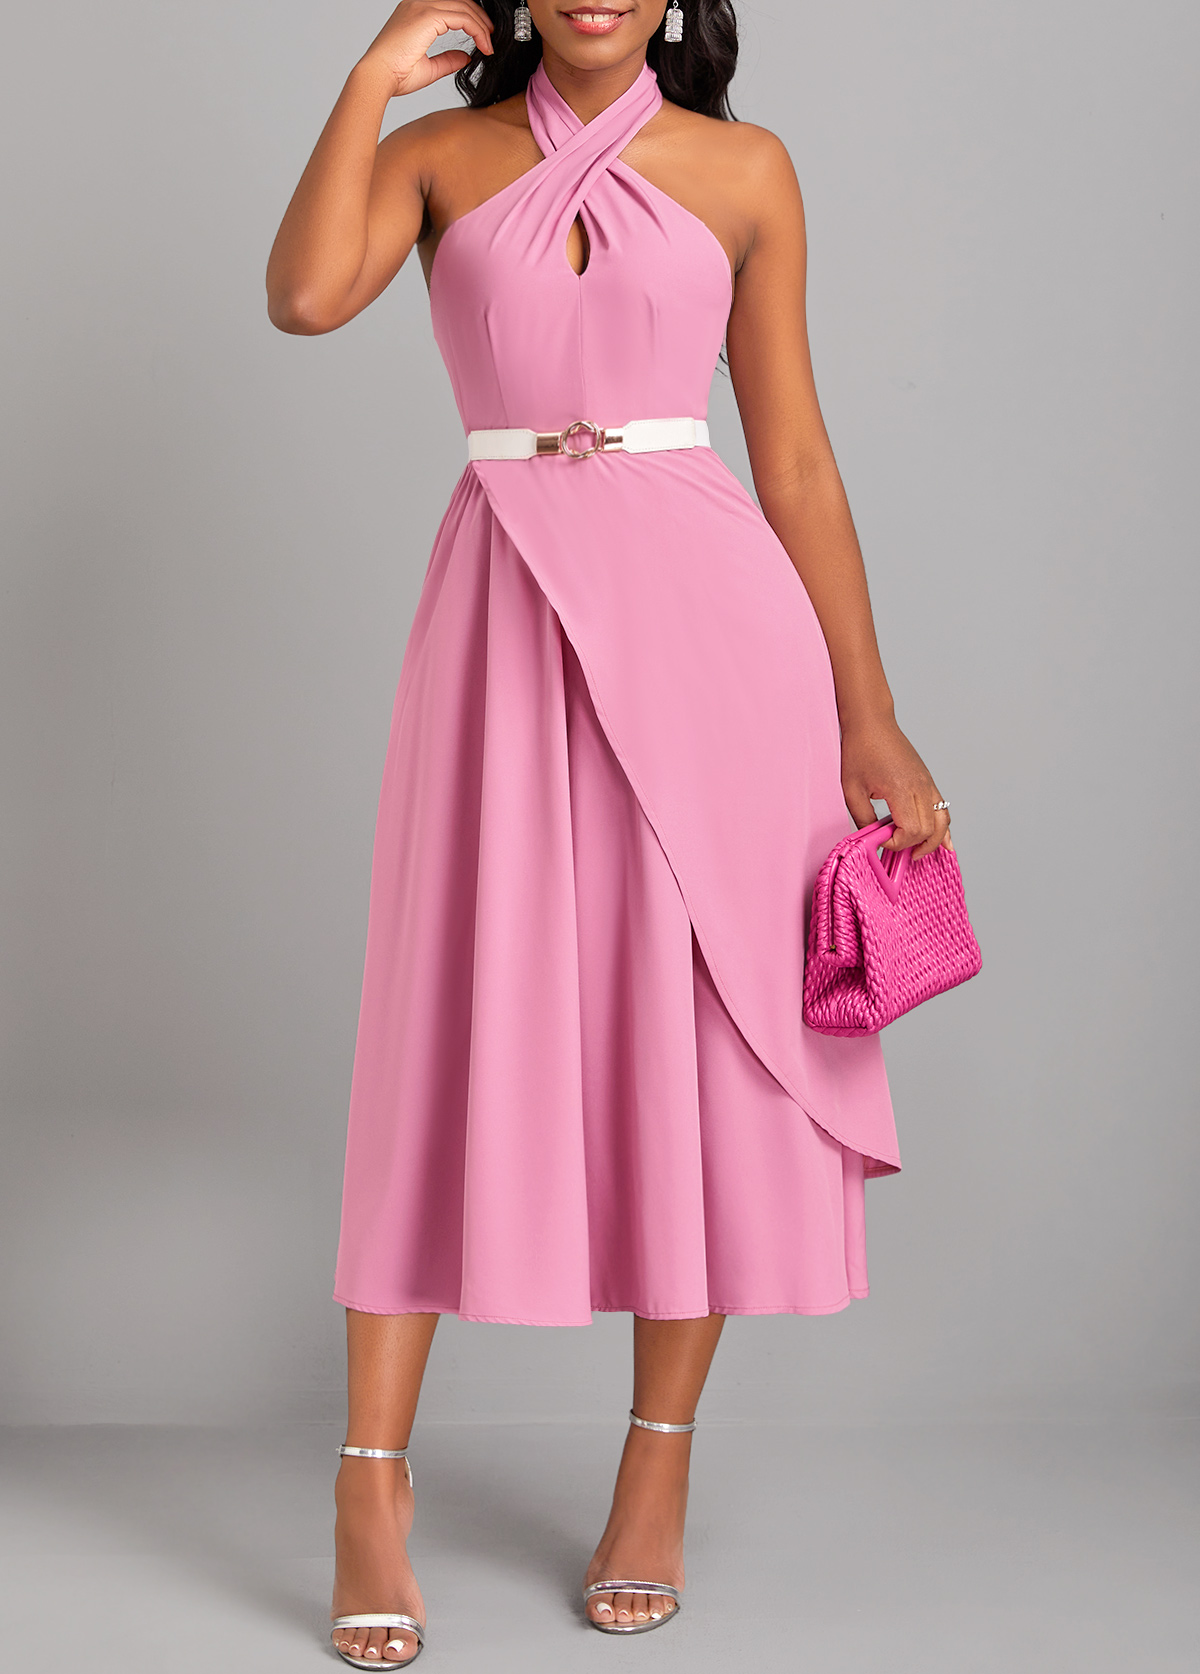 Criss Cross Layered Pink Sleeveless Dress